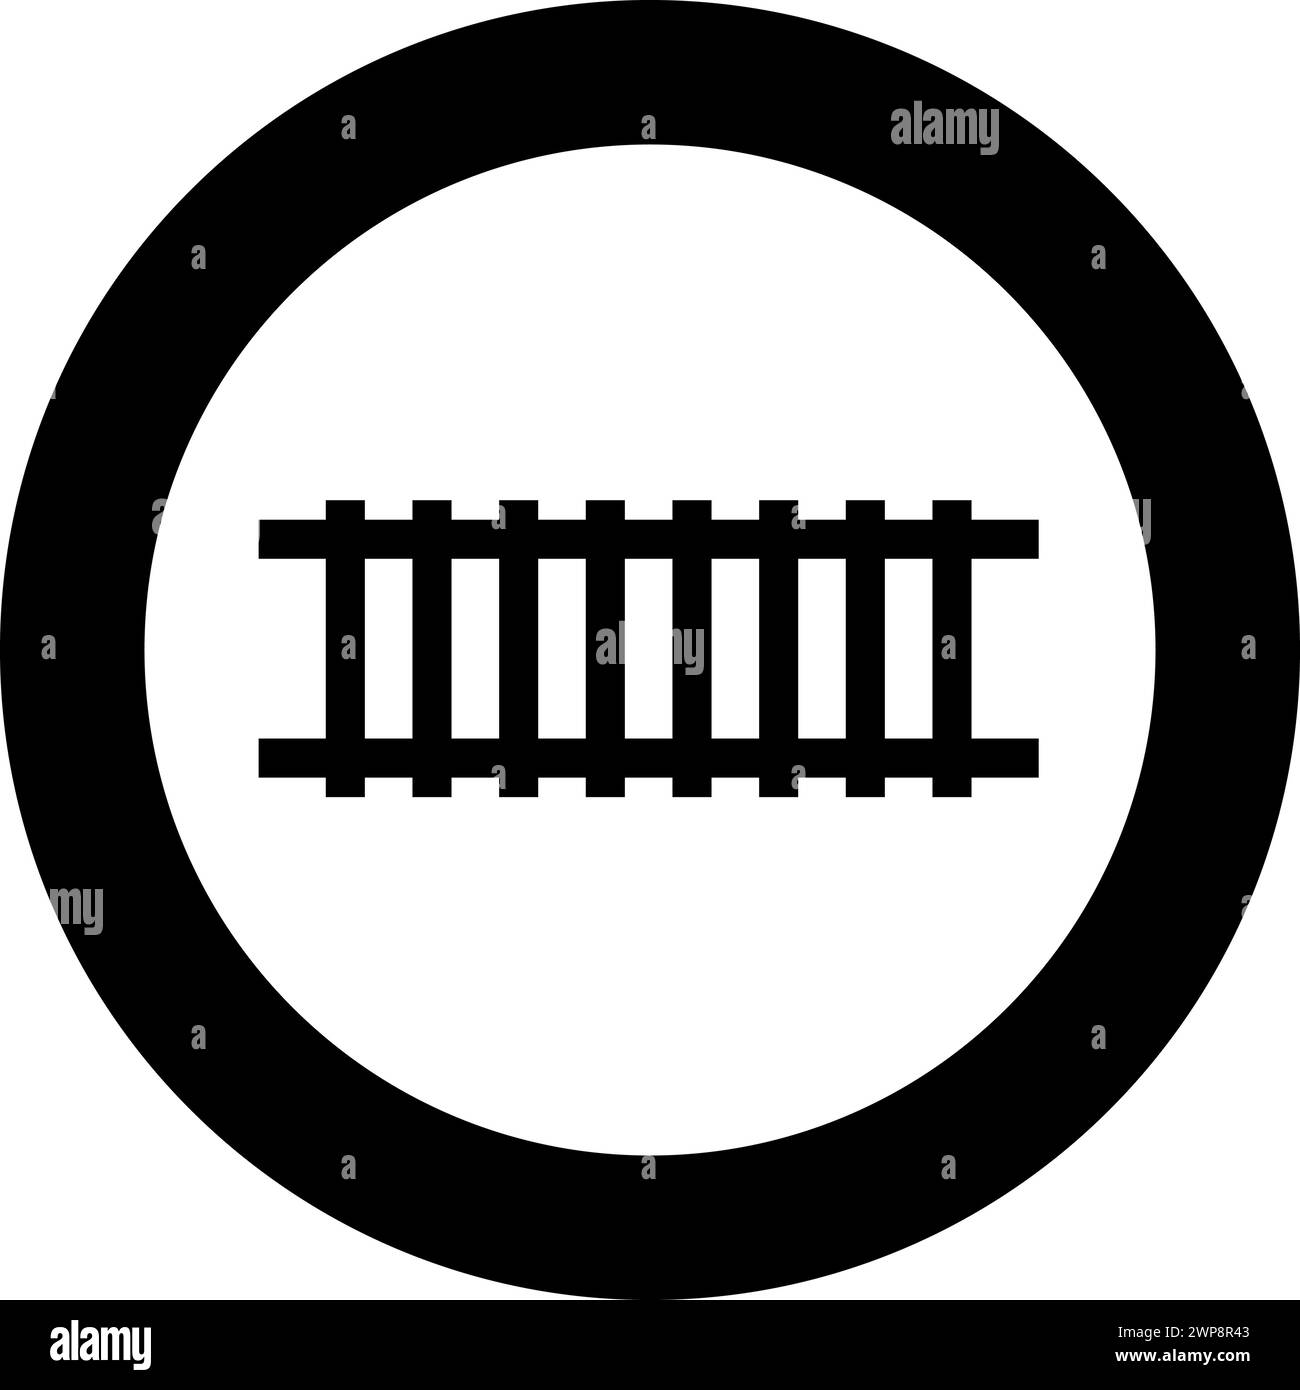 Railway track railroad path rail train subway metro tram transportation concept icon in circle round black color vector illustration image solid Stock Vector